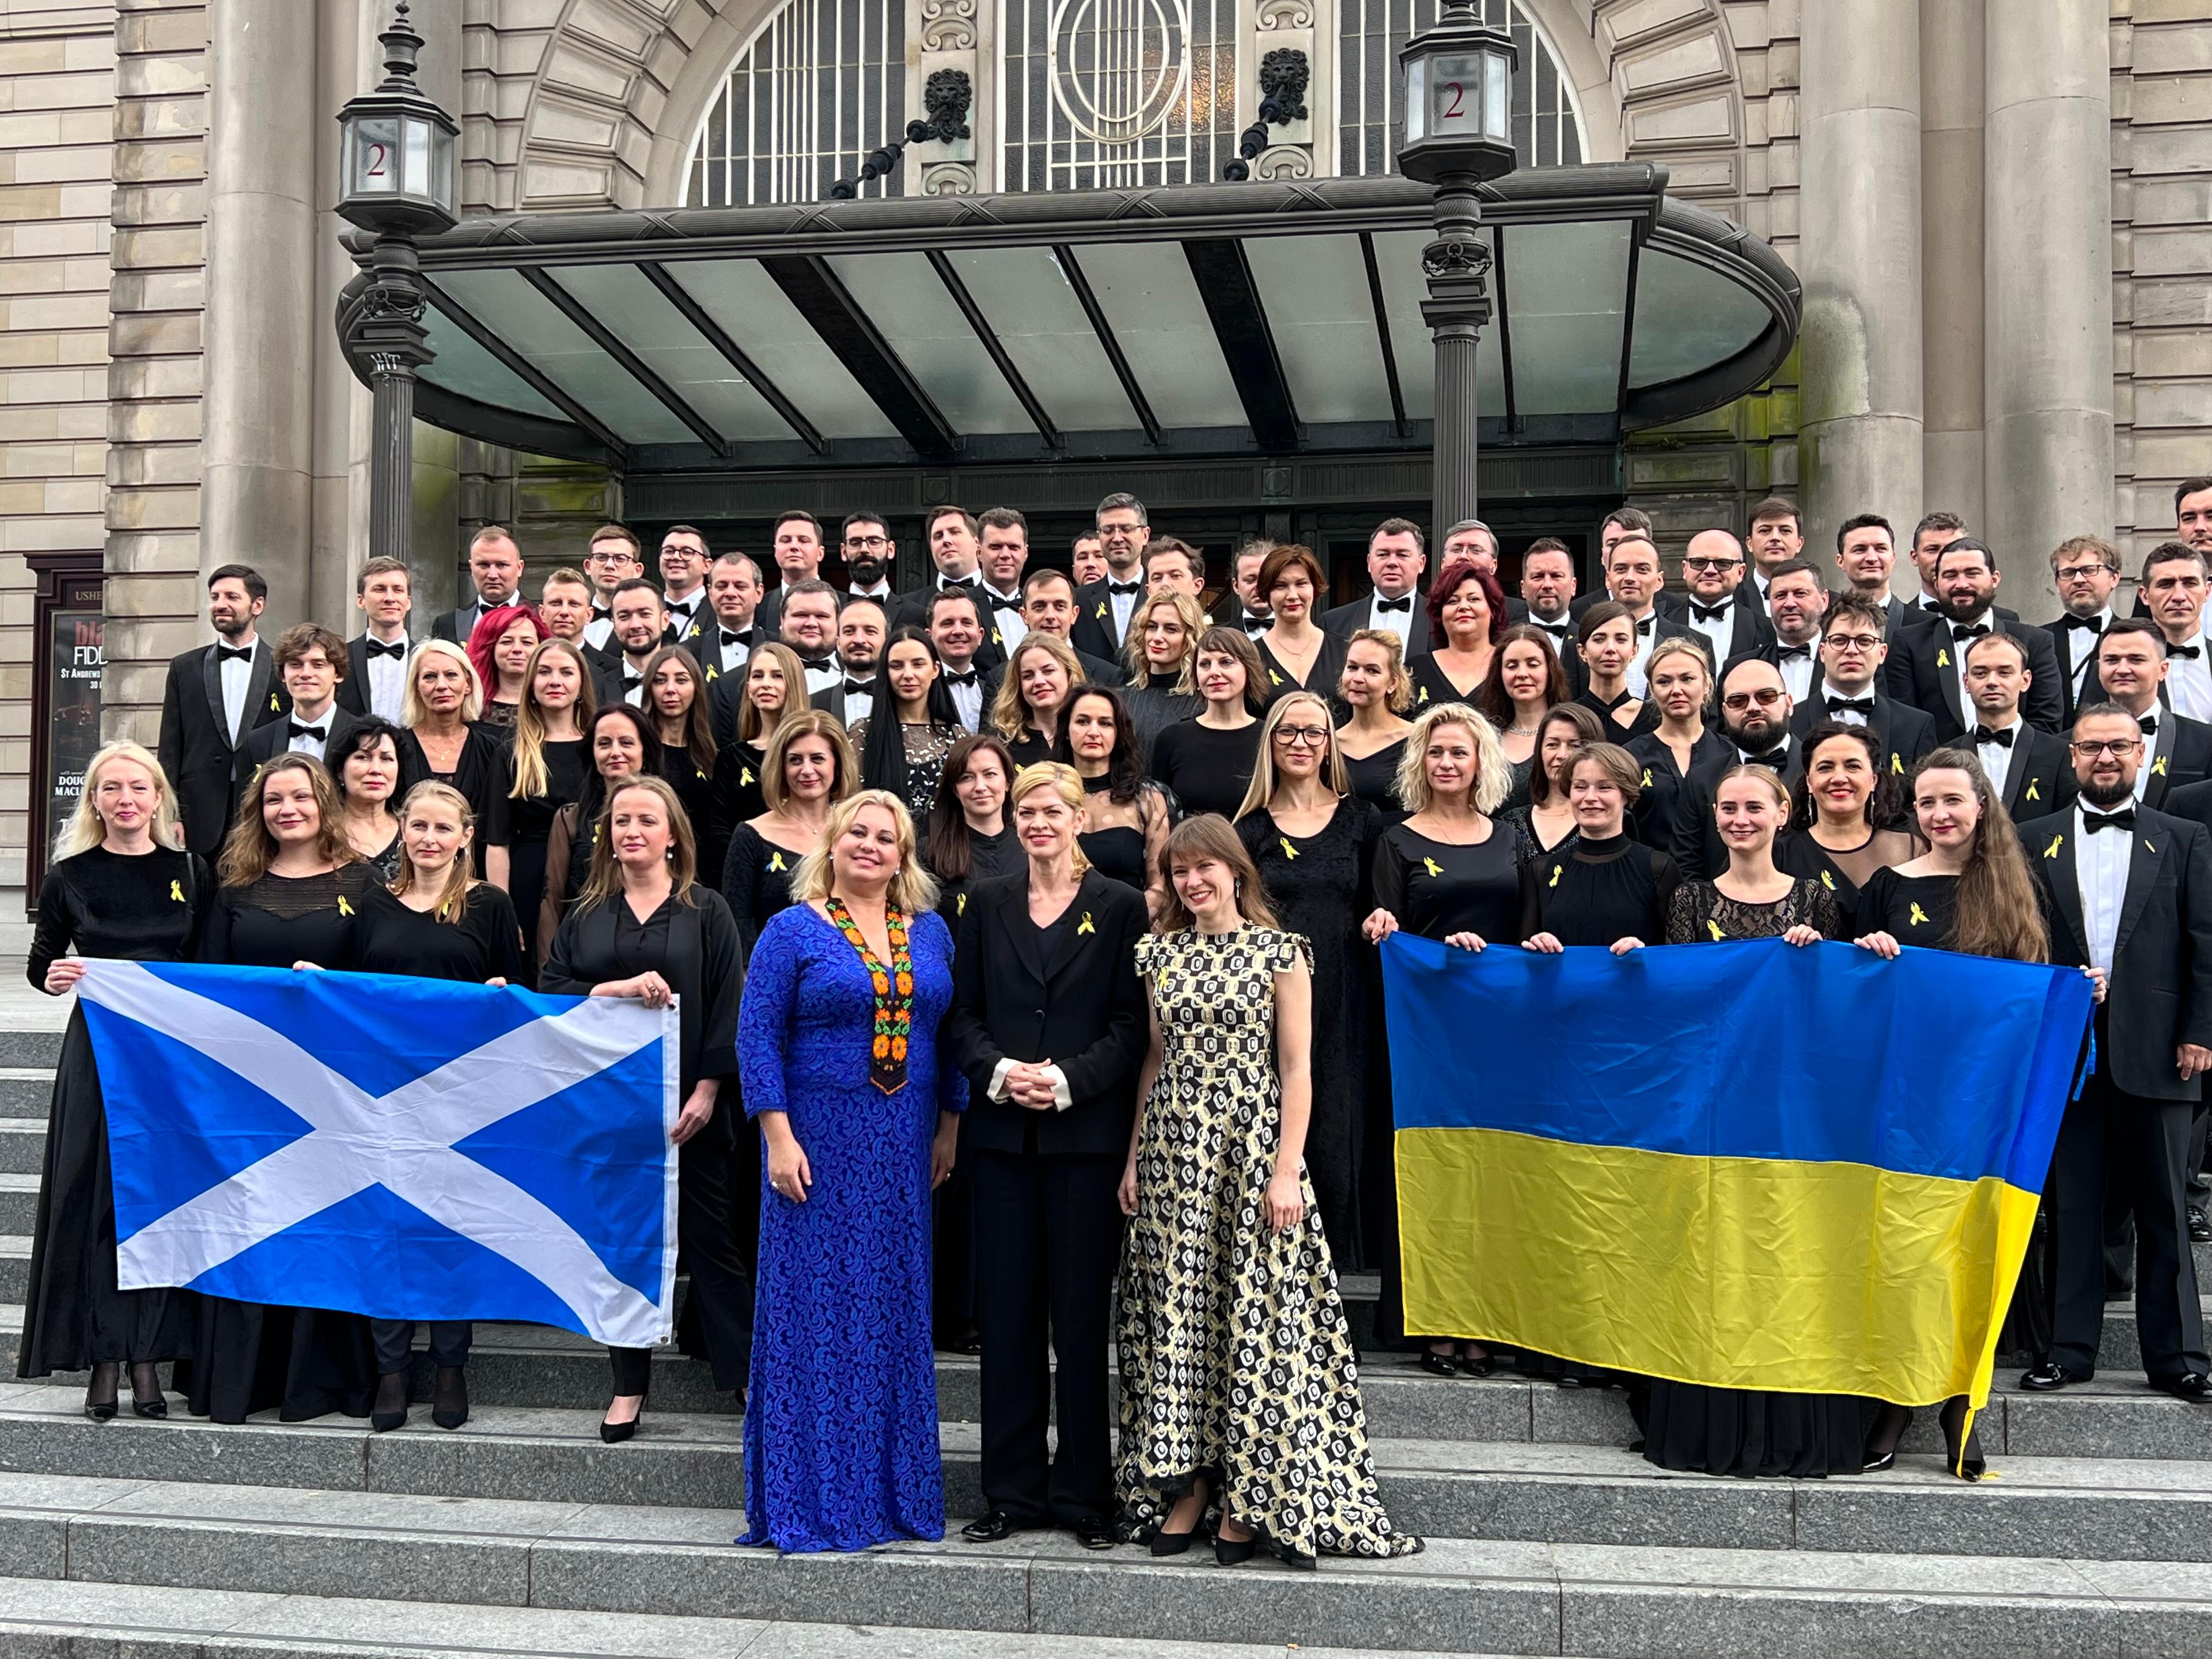 The Ukrainian Freedom Orchestra stood as a group at the Edinburgh International Festival, holding both Scottish and Ukrainian flags